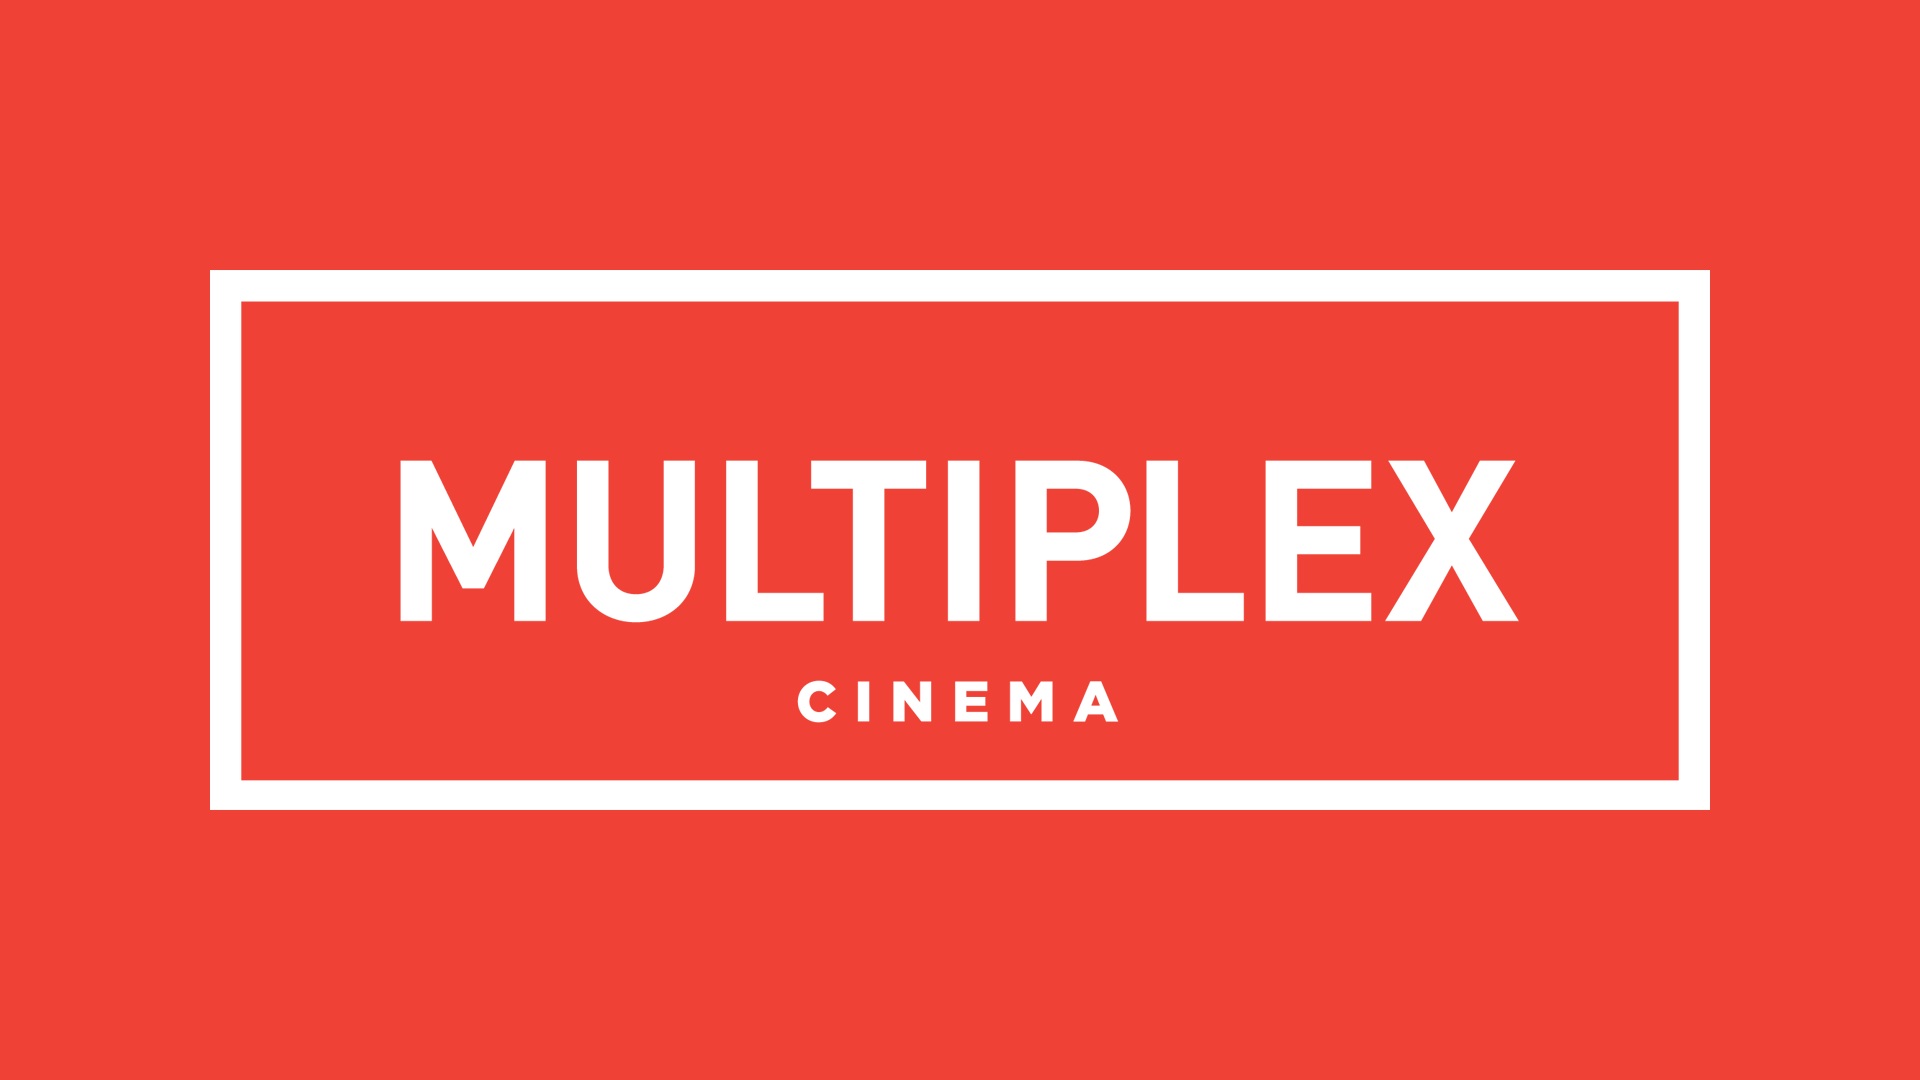 File:Multiplex logo.jpg - Wikimedia Commons